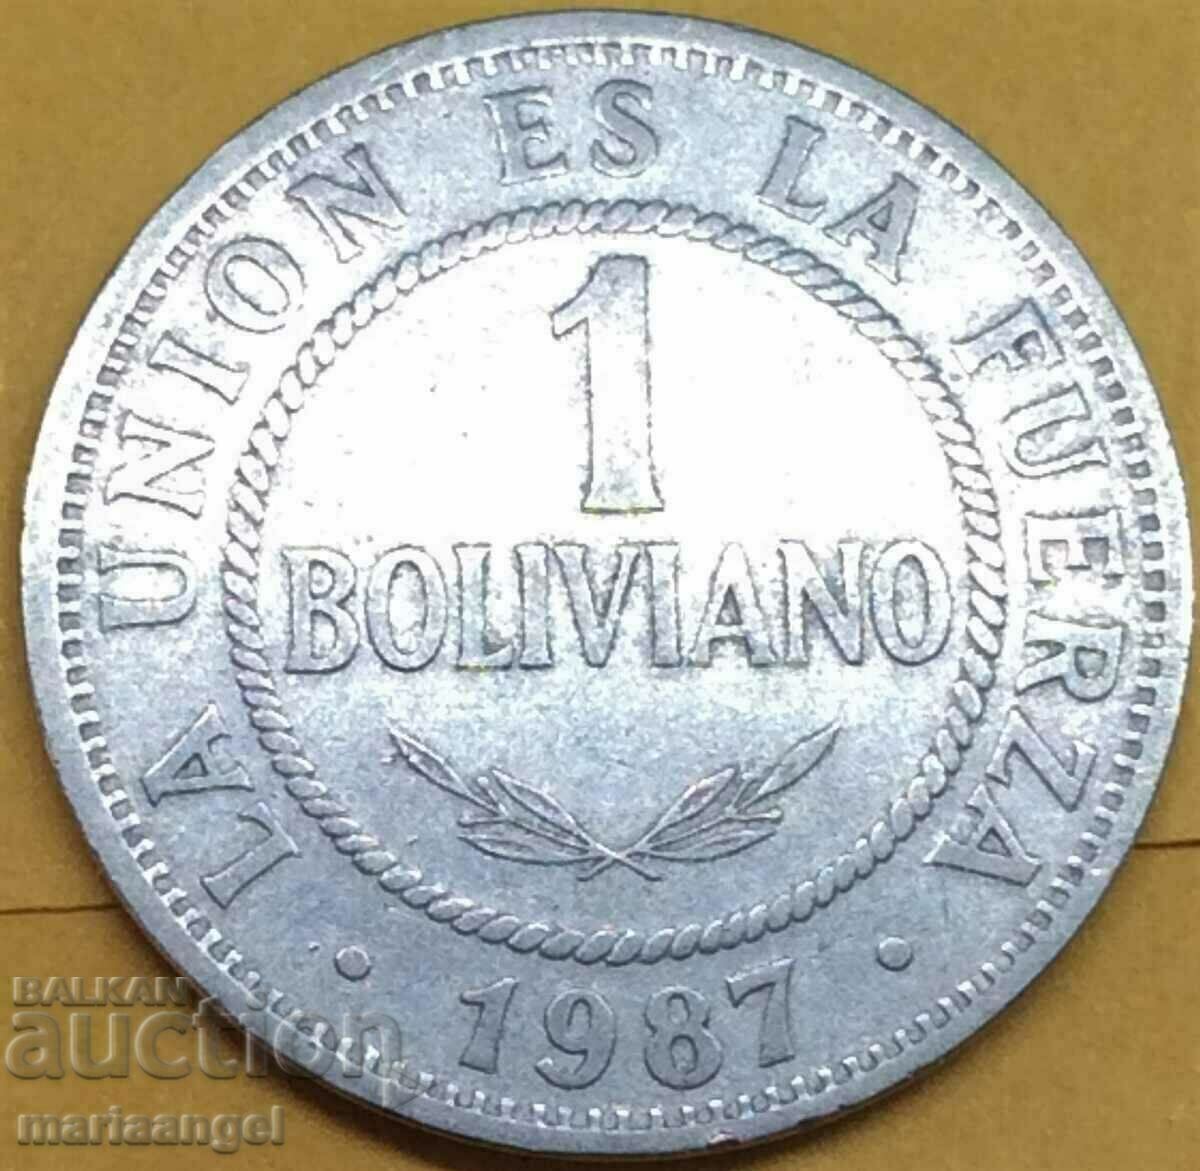 Bolivia 1 Boliviano 1987 27mm